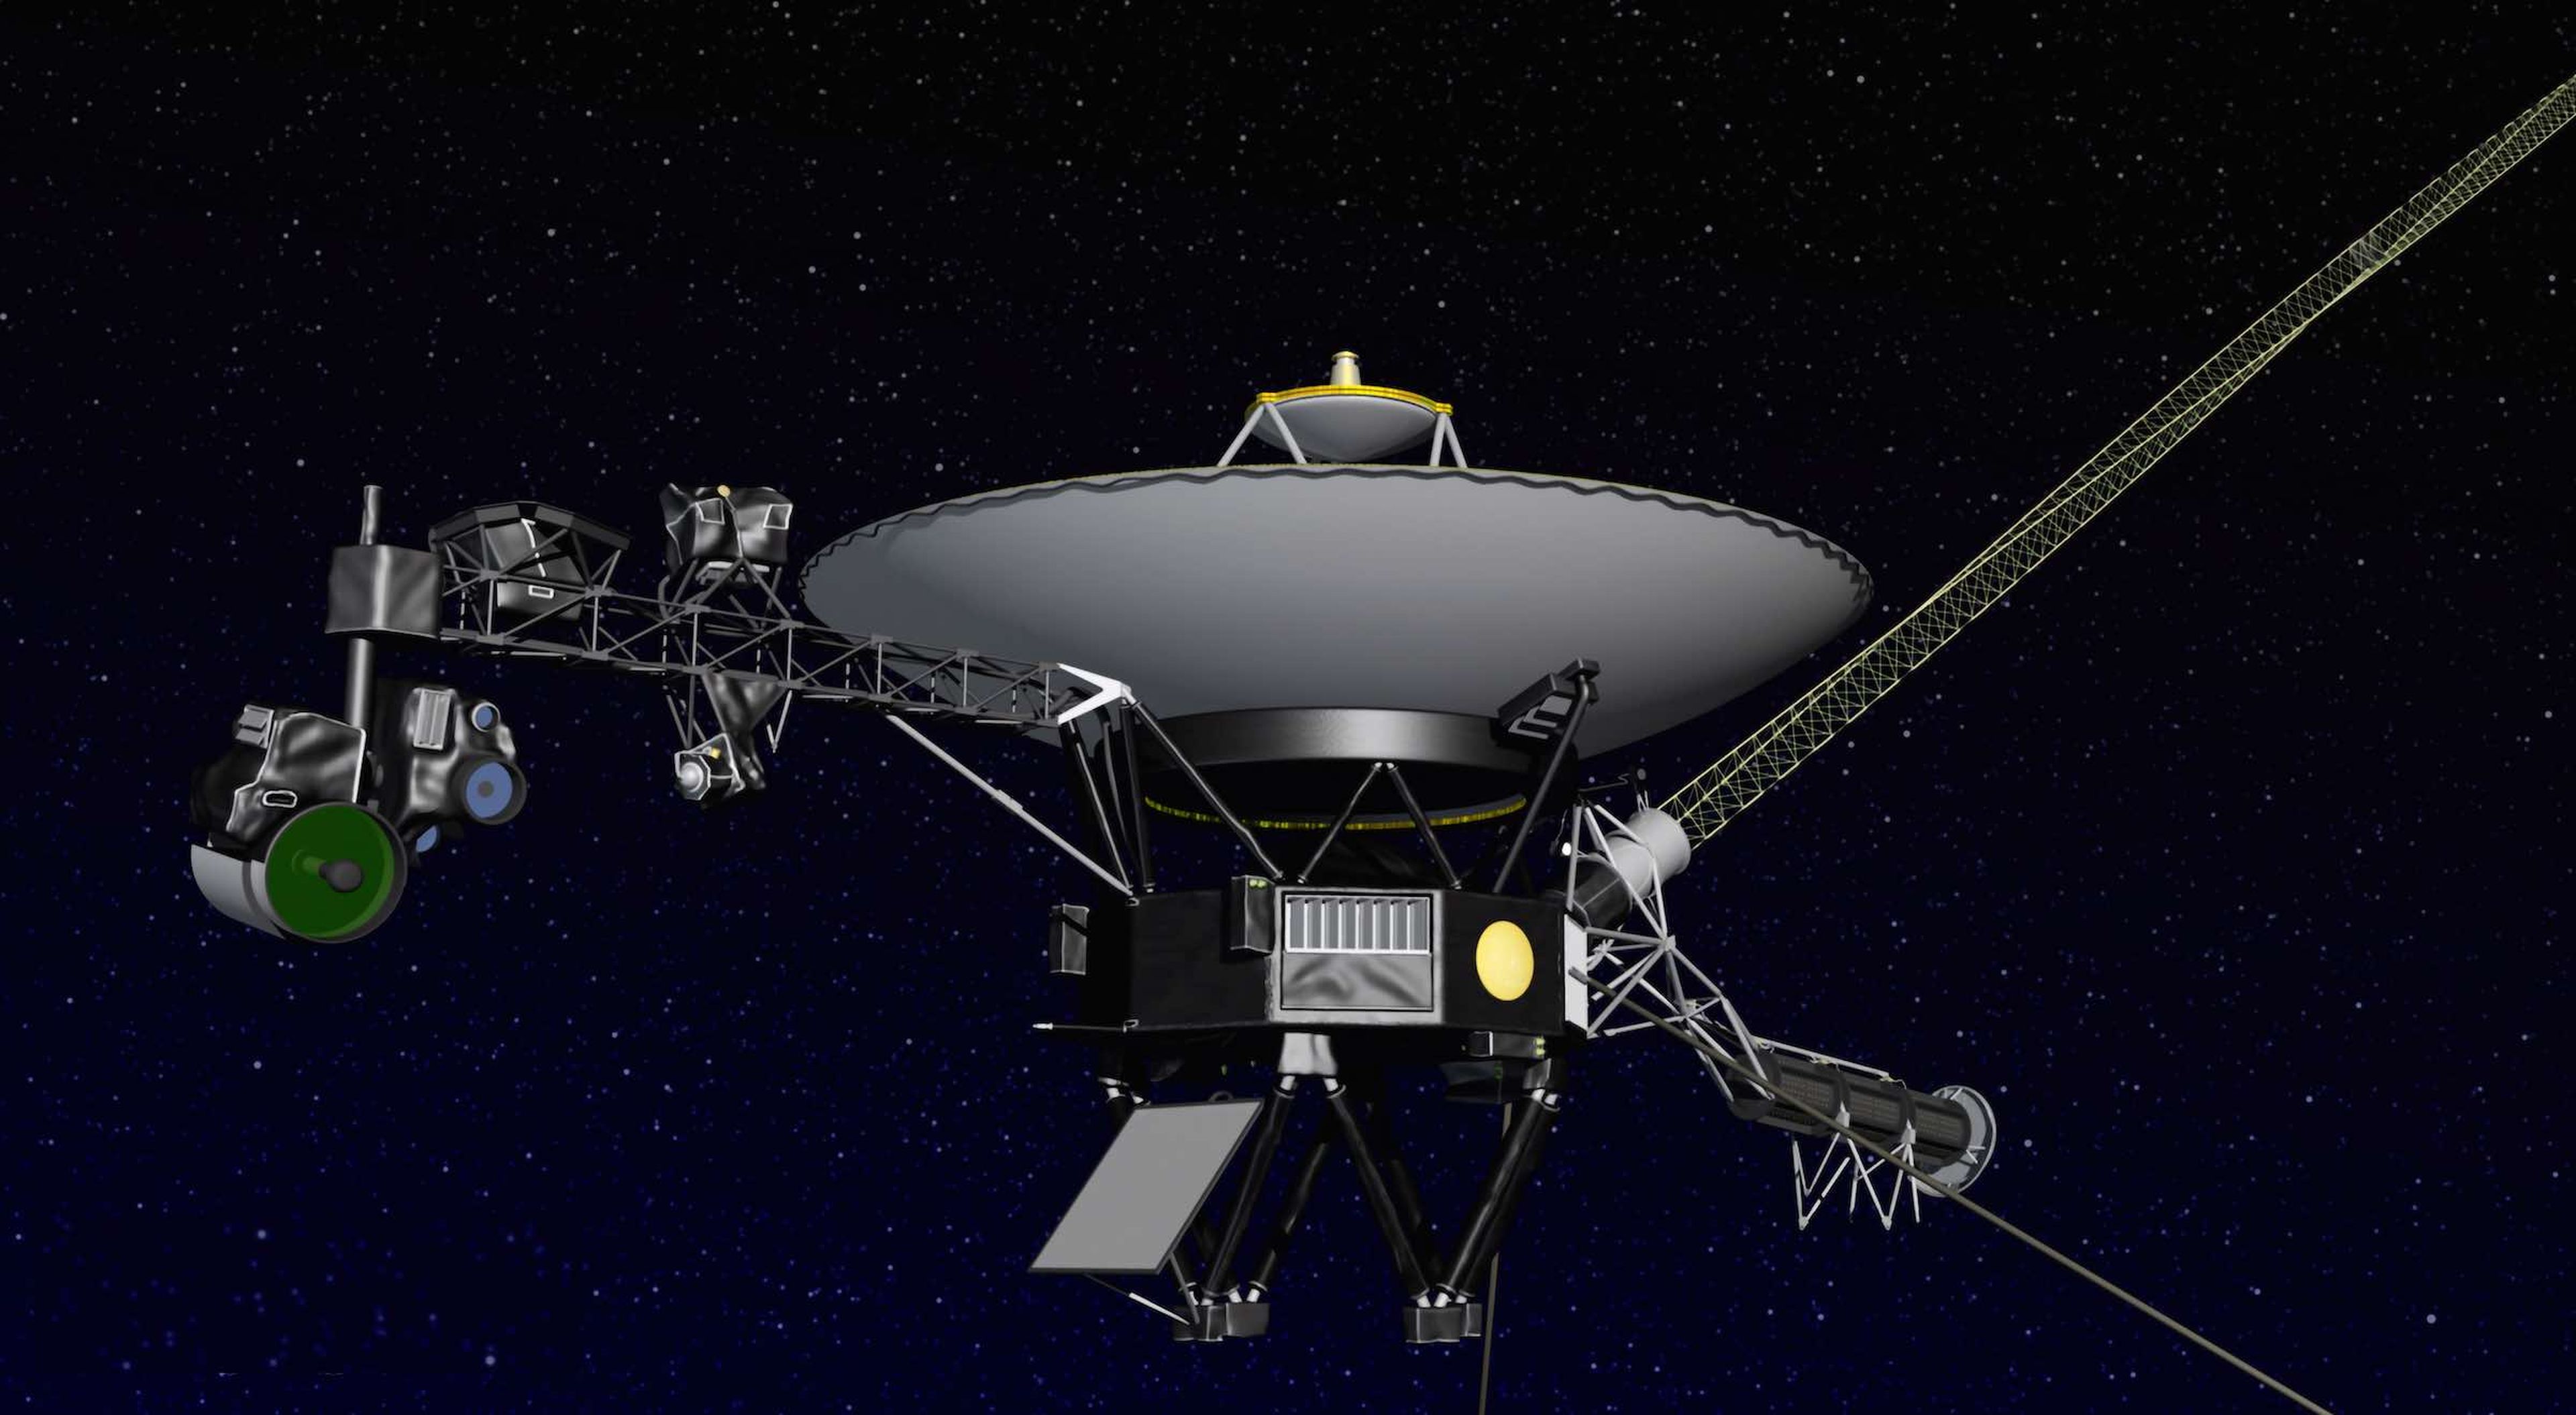 Voyager 2